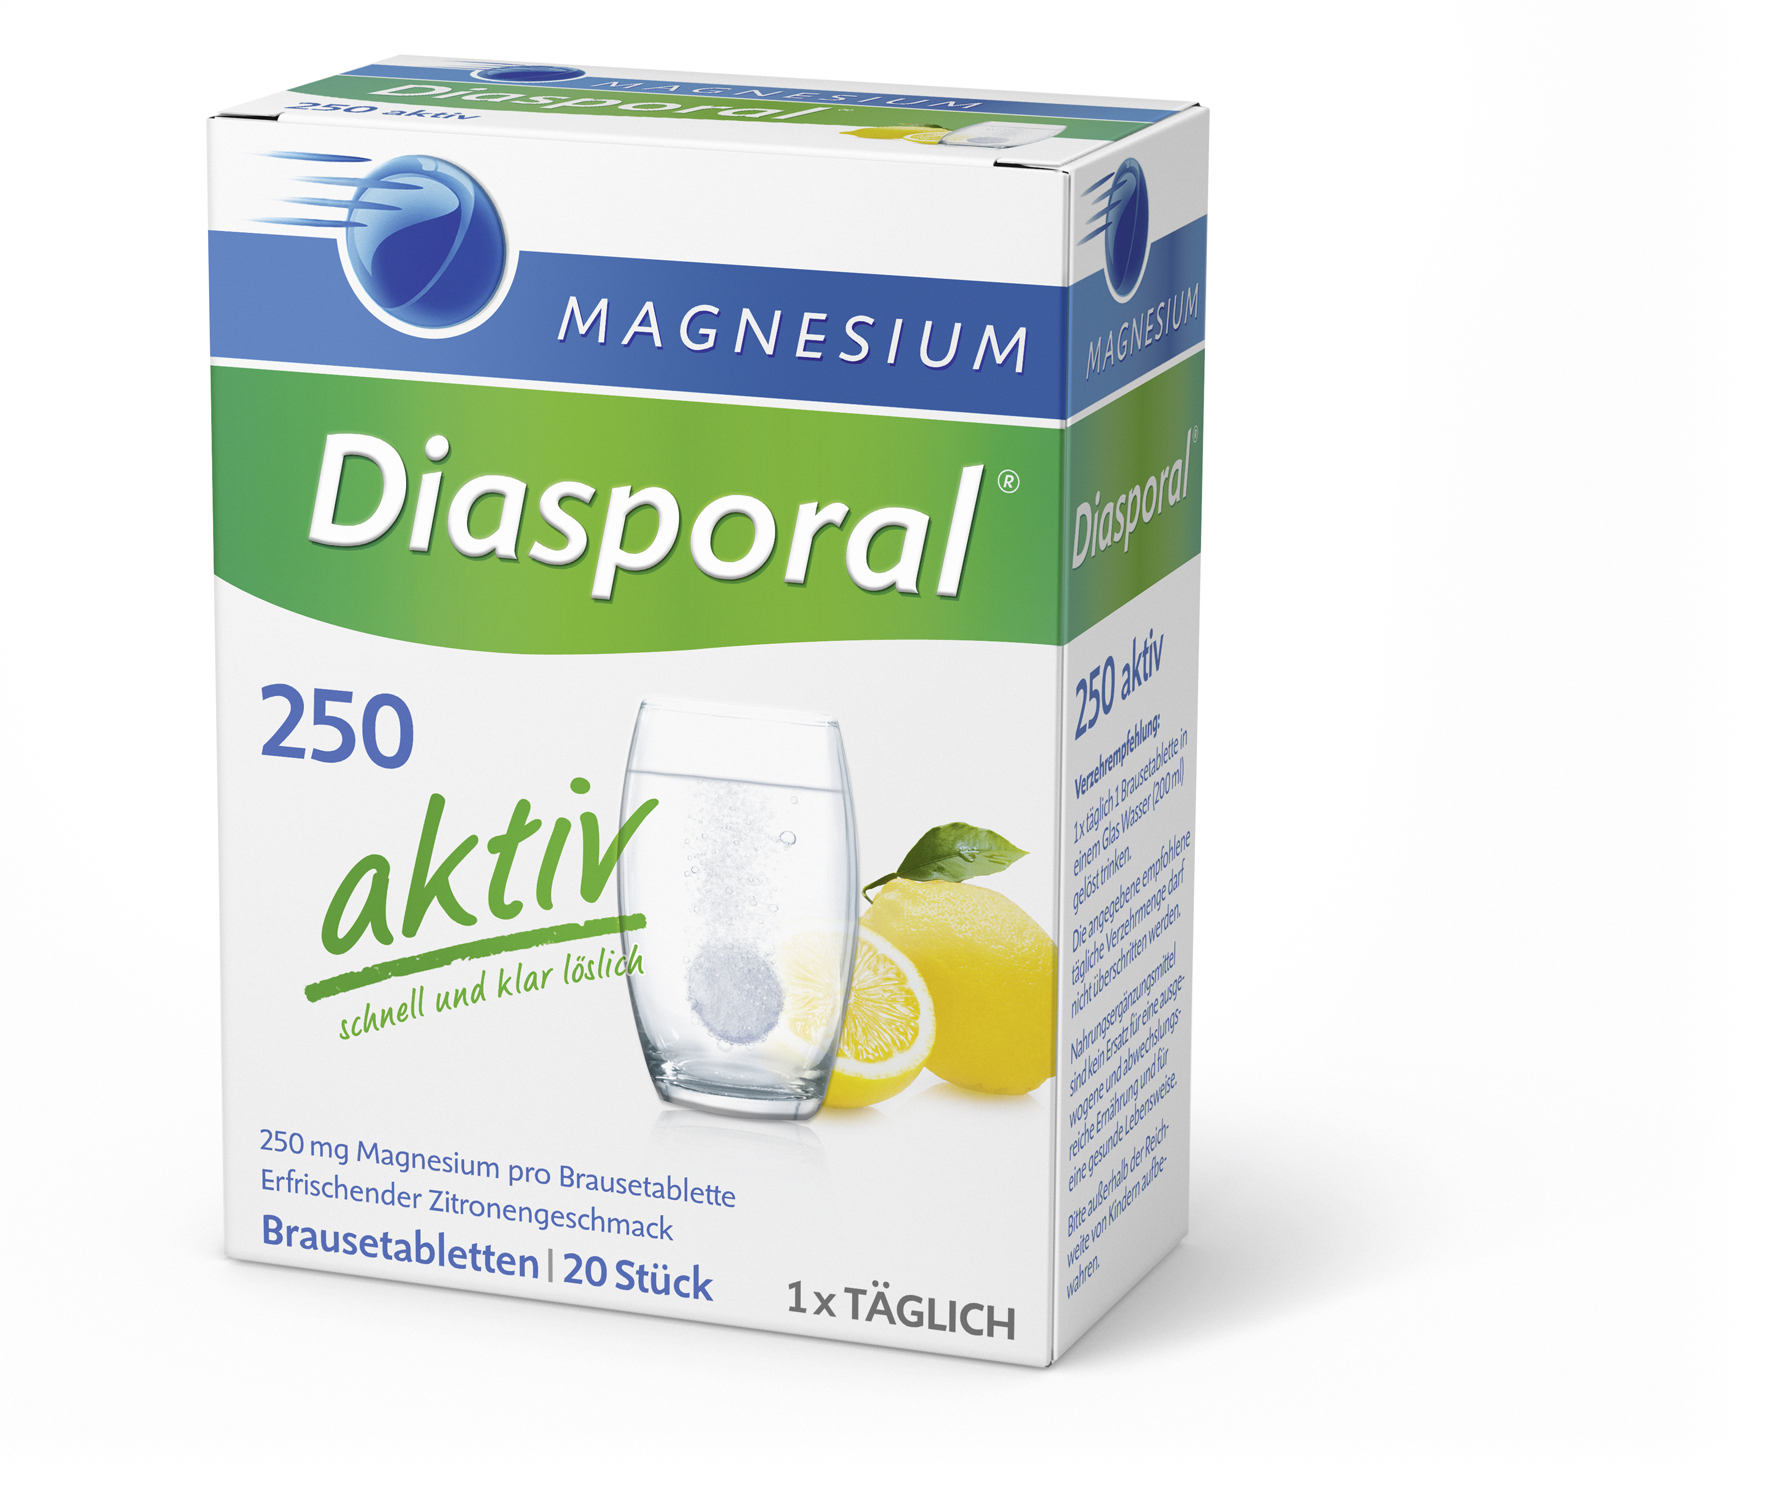 Magnesium Diasporal 250 aktiv 20